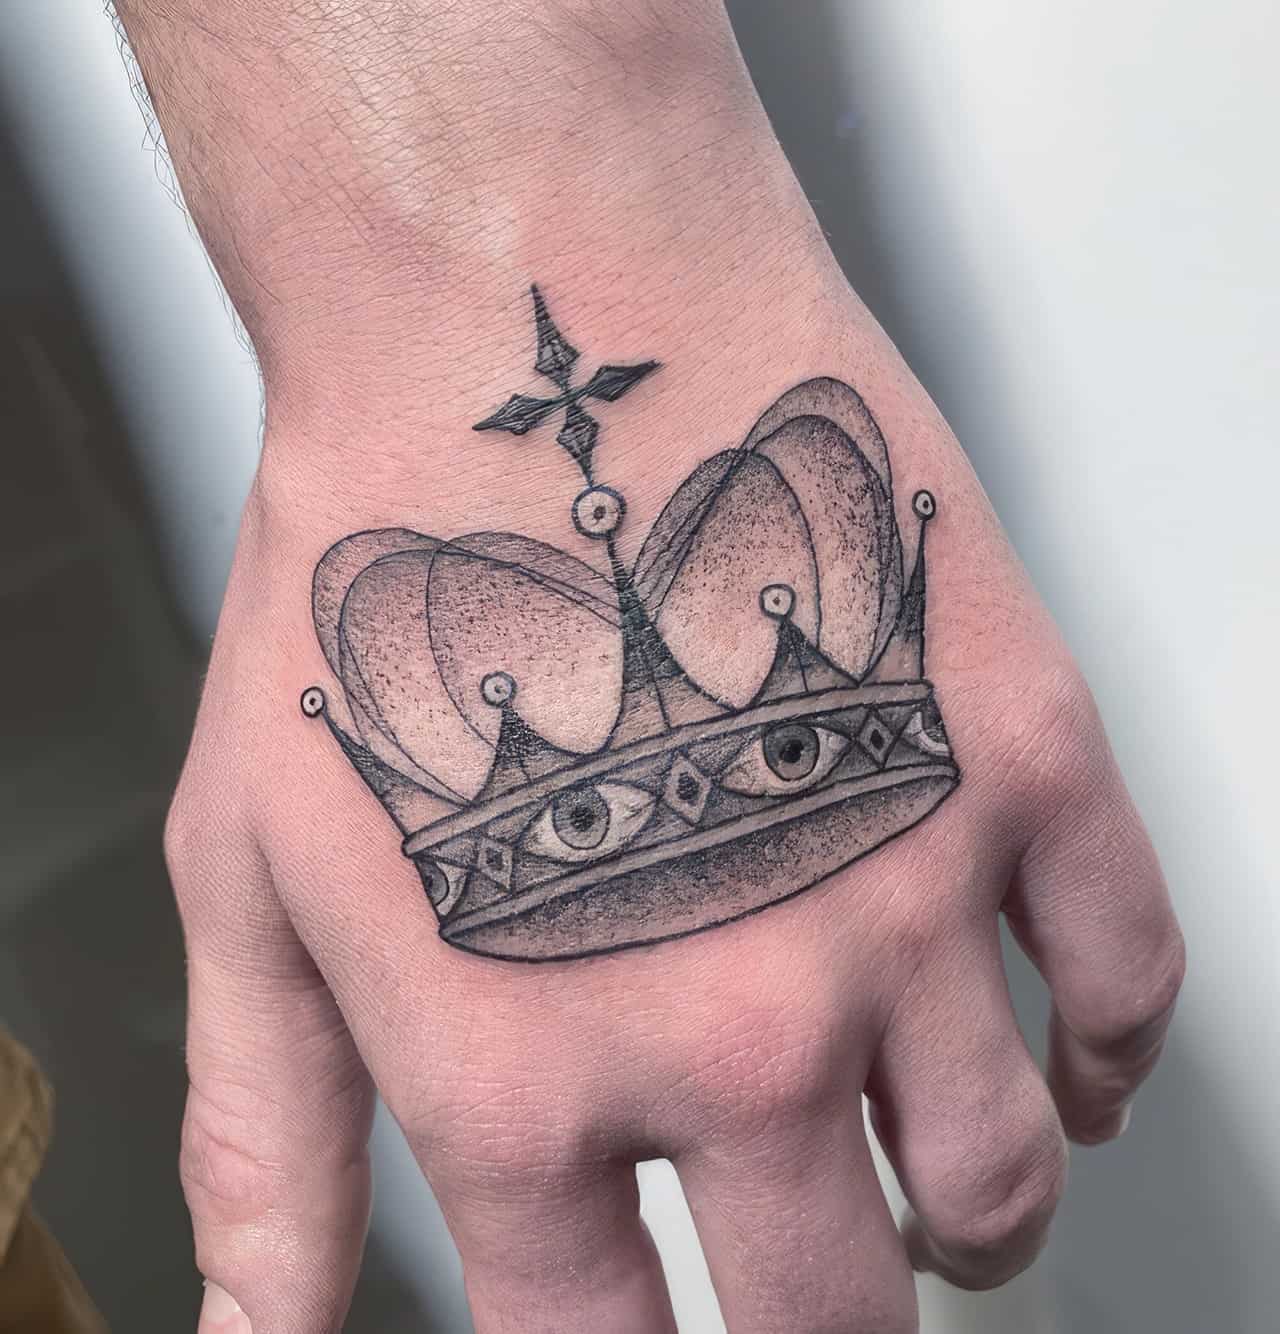 Crown Thank you for trusting Badshot Tattoo 🙏🏼😊💯 | Instagram